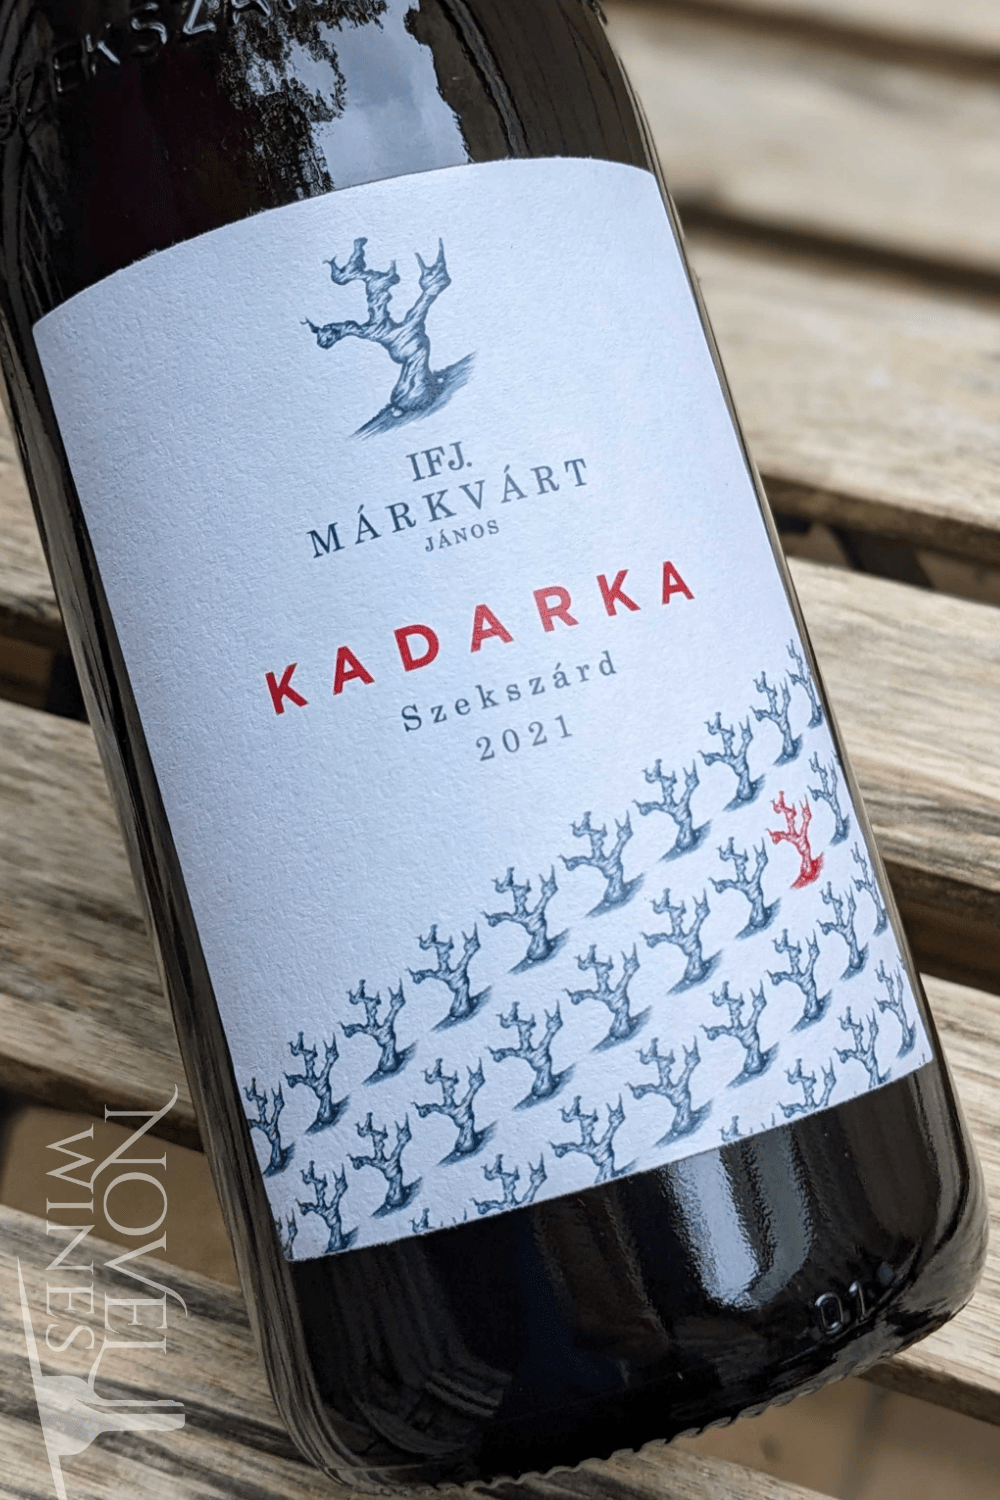 Markvart Red Wine Markvart Old Vine Kadarka 2020, Hungary